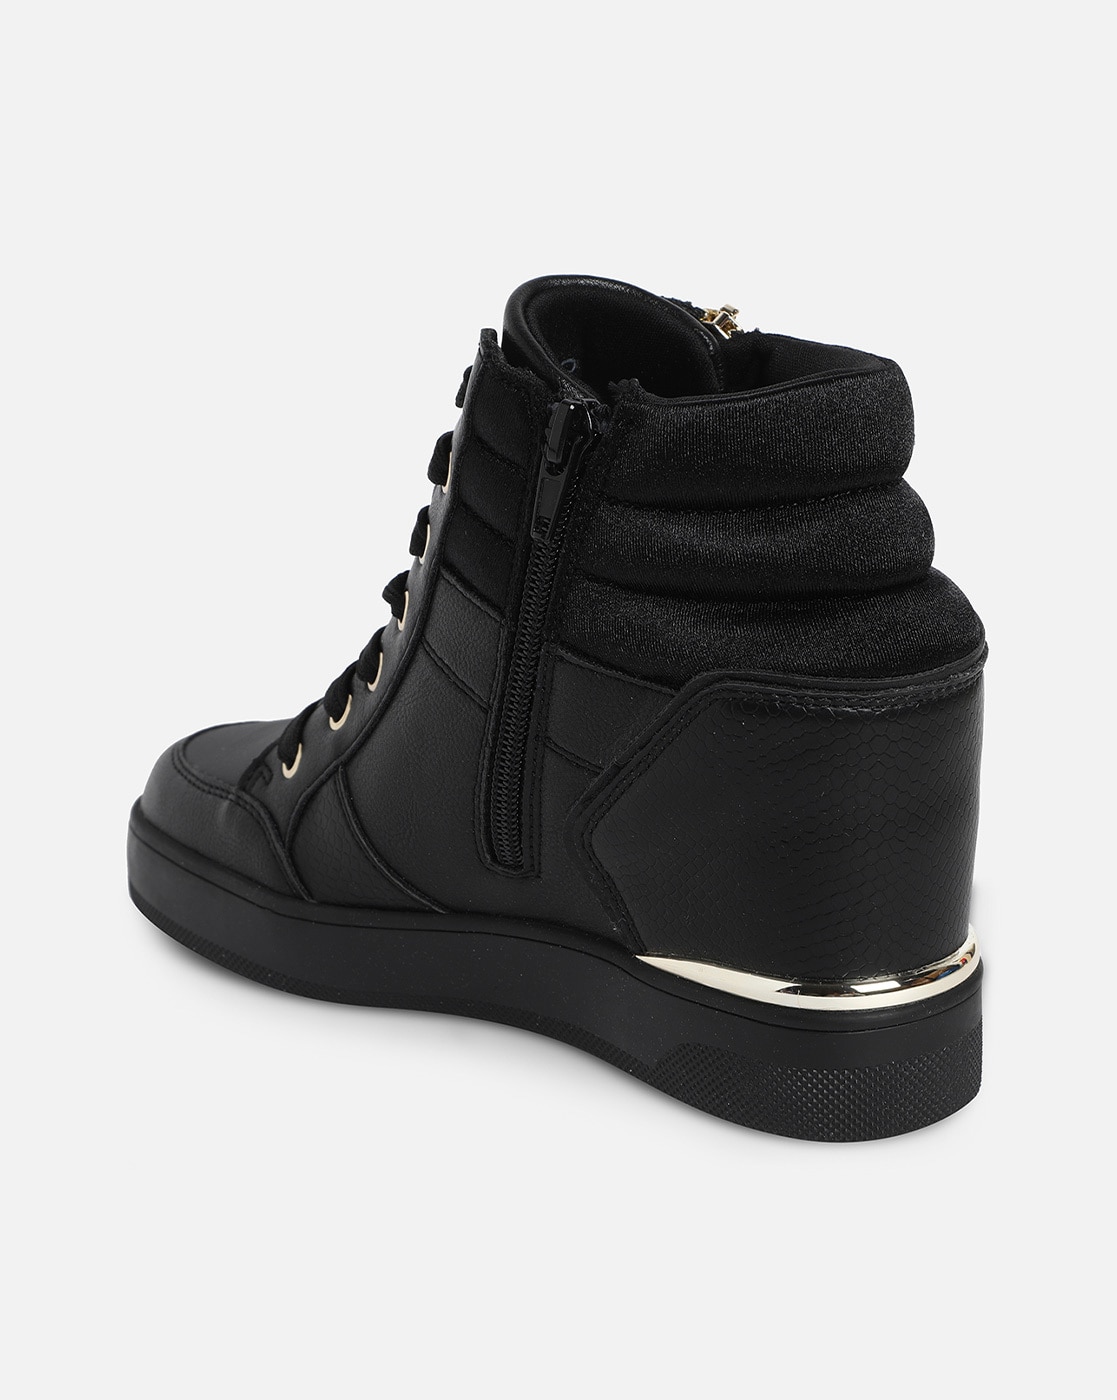 ALDO 'Sclub ' White Faux Leather Platform Low Top Sneakers Women's Size 9  NEW! | eBay